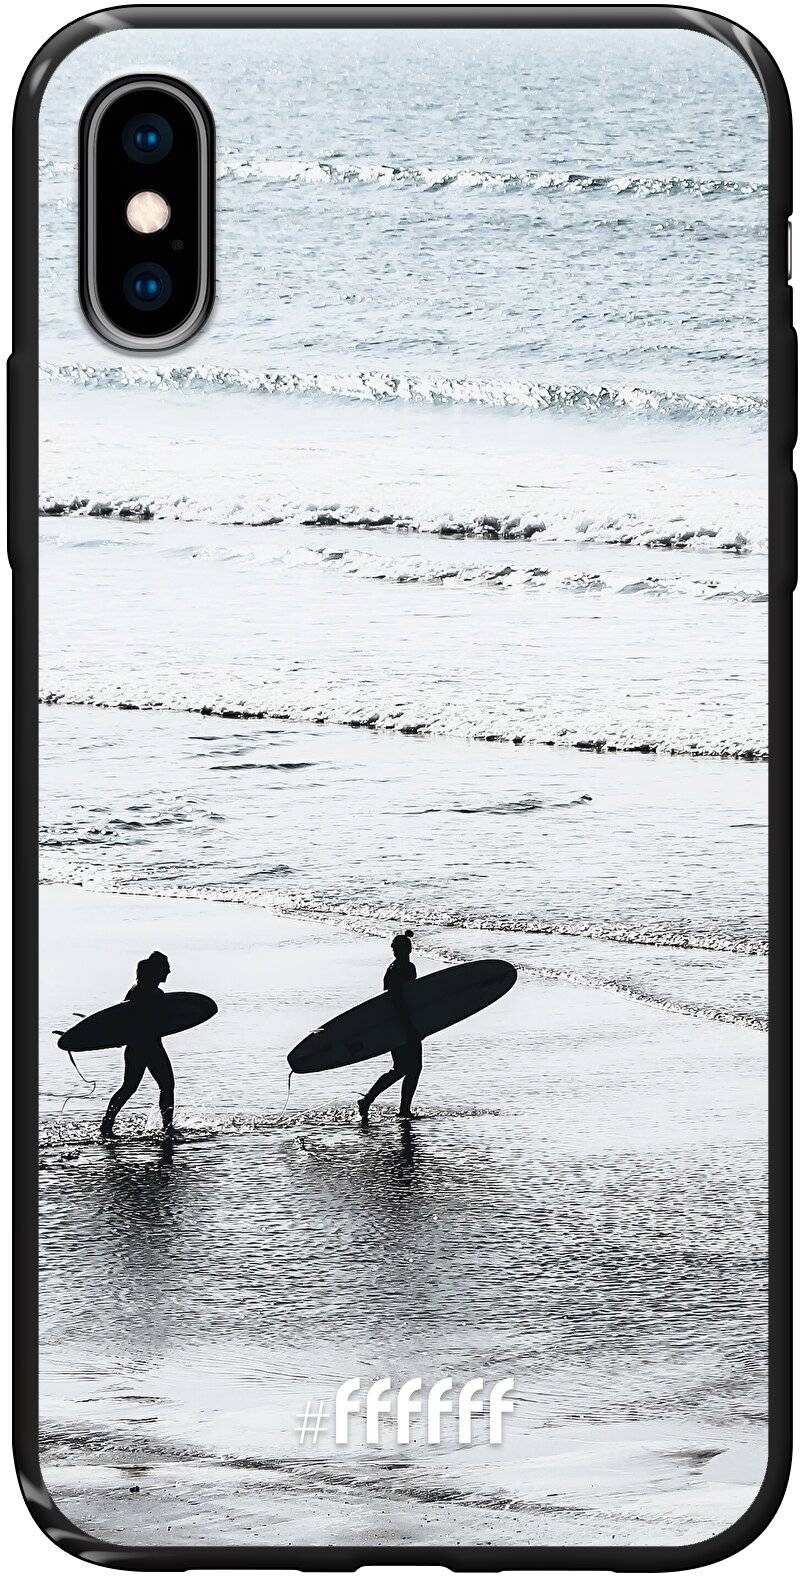 Surfing iPhone X